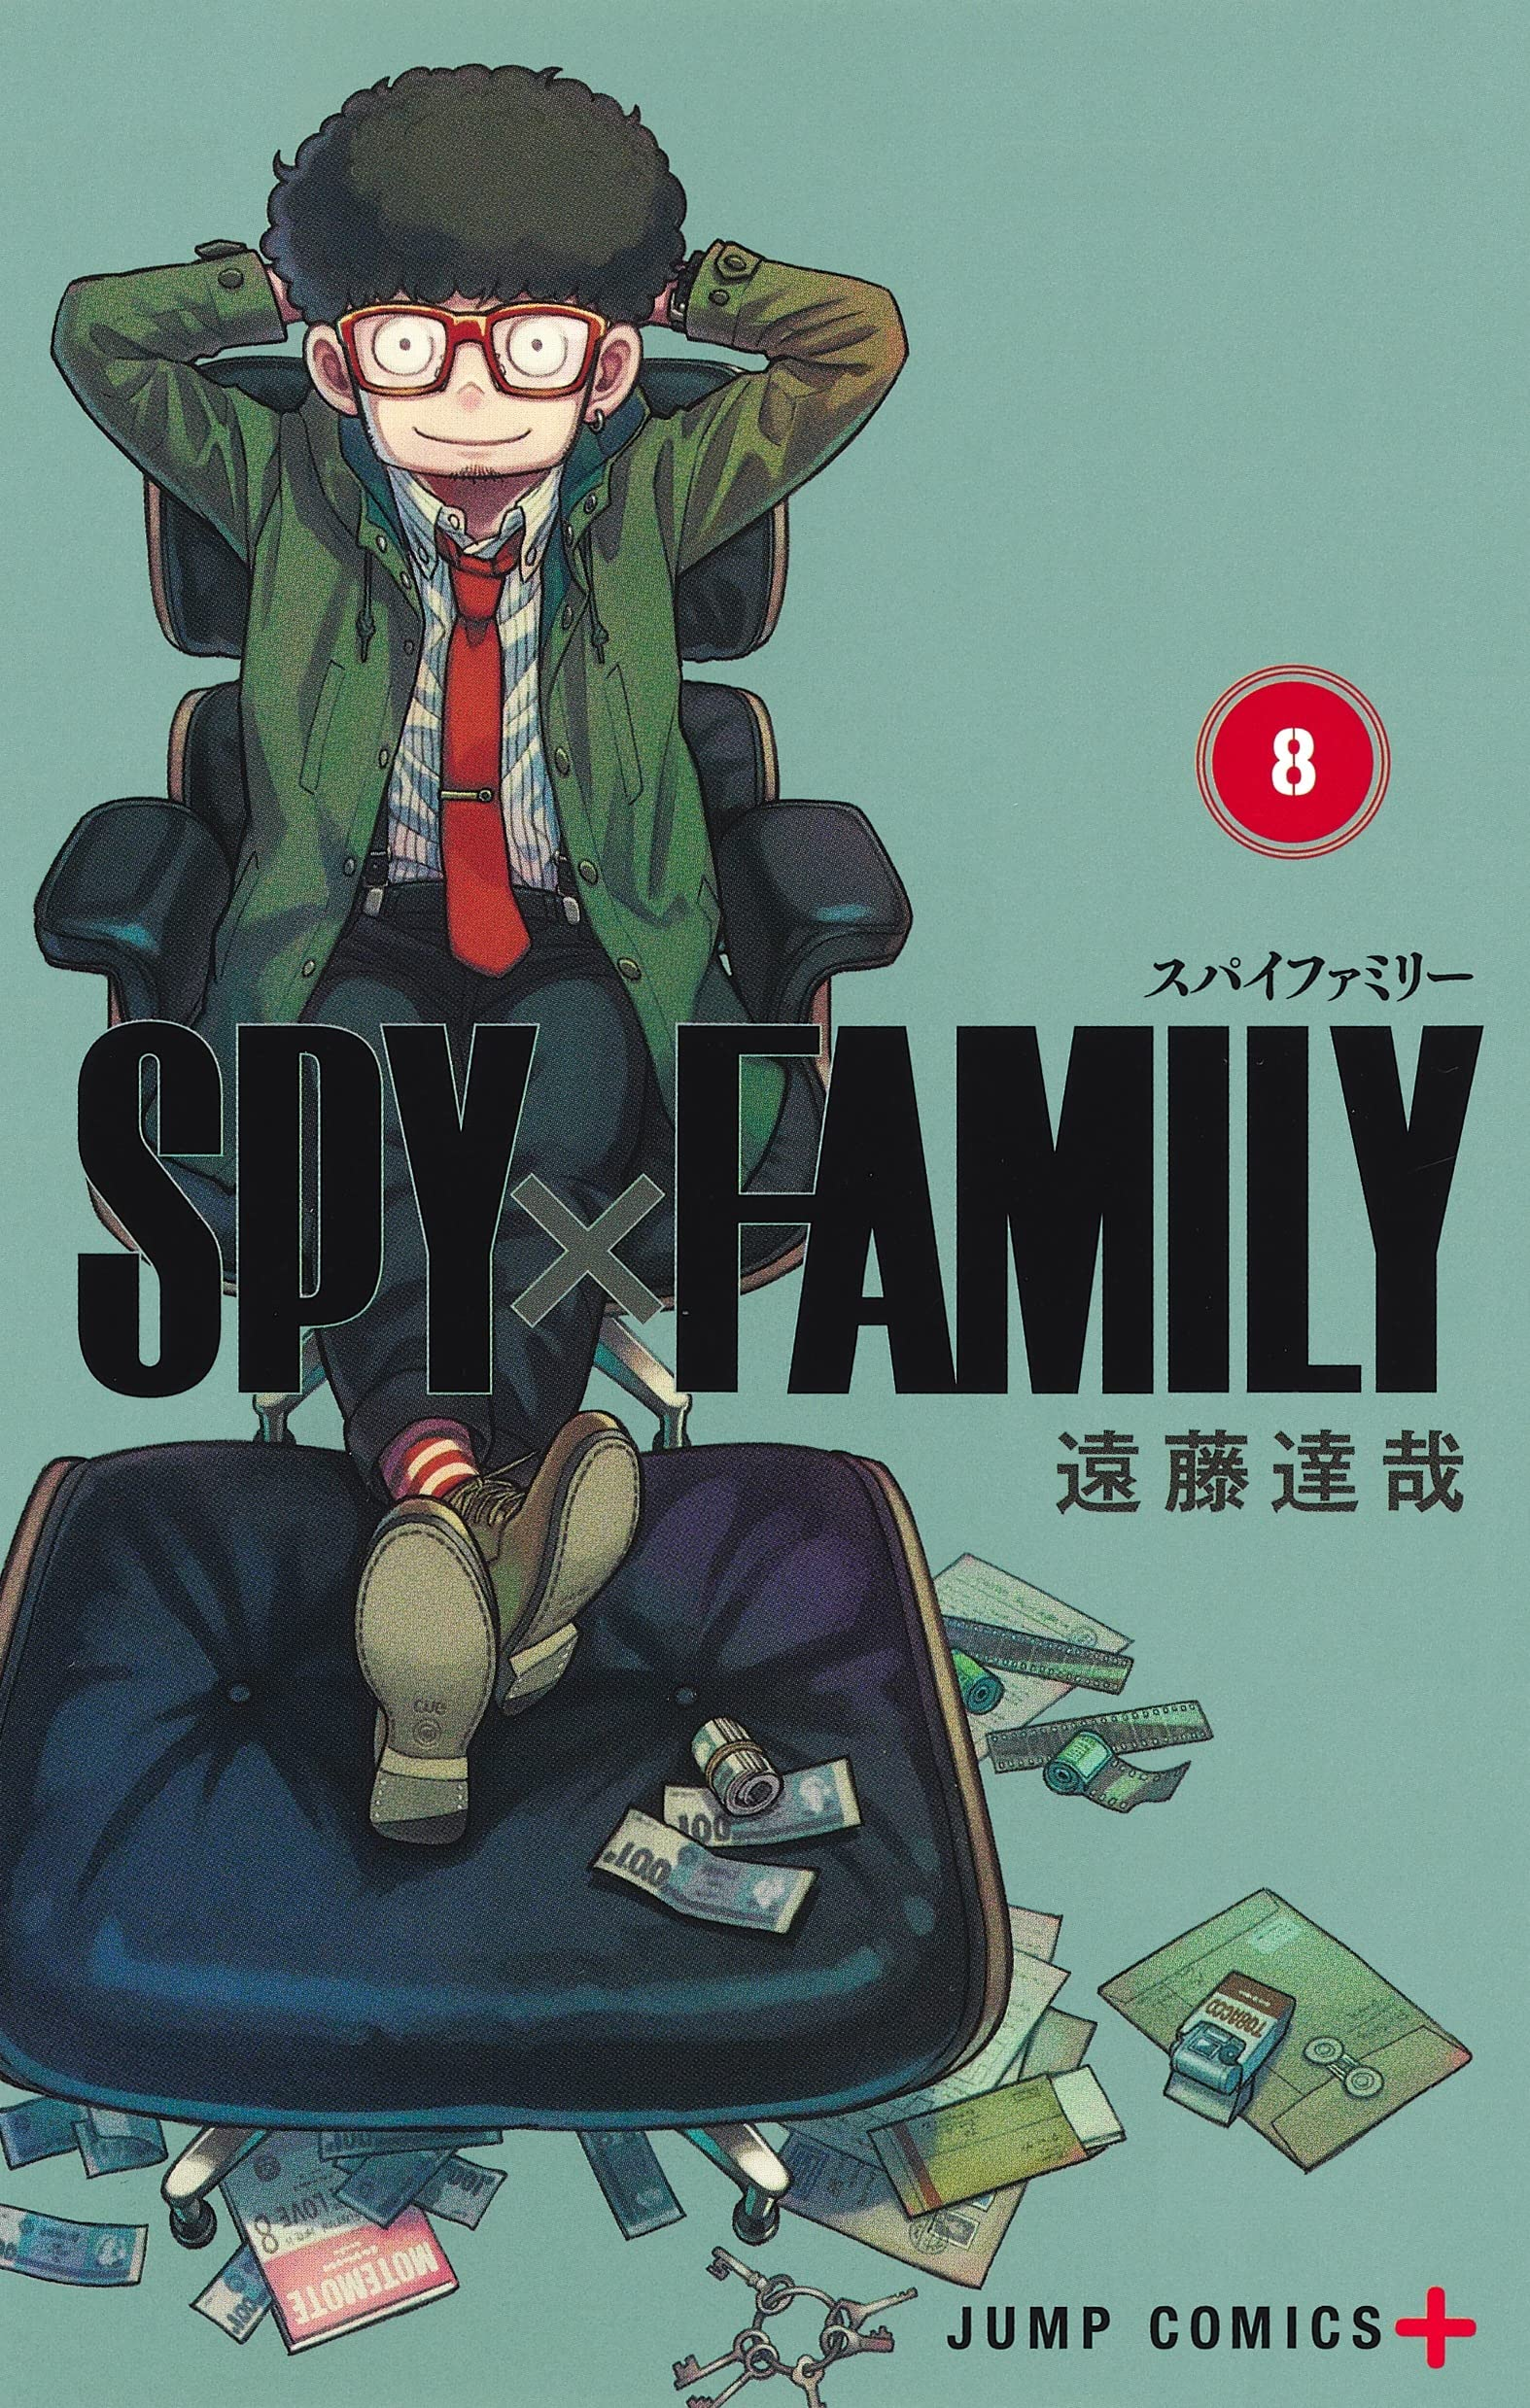 Episodes and Volumes, Spy x Family Wiki